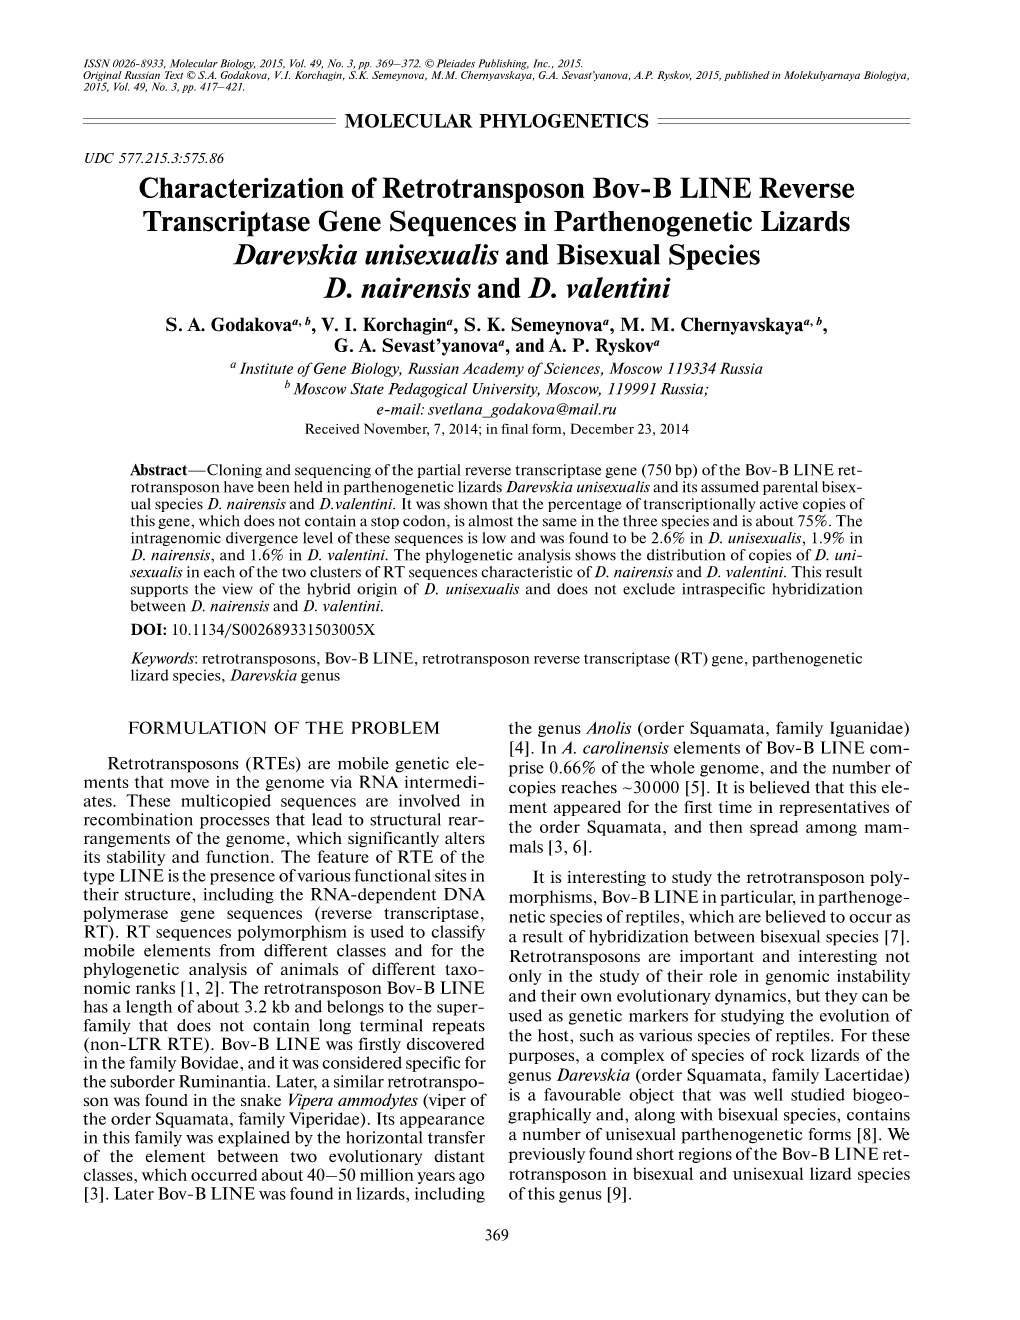 Characterization of Retrotransposon Bovb LINE Reverse Transcriptase